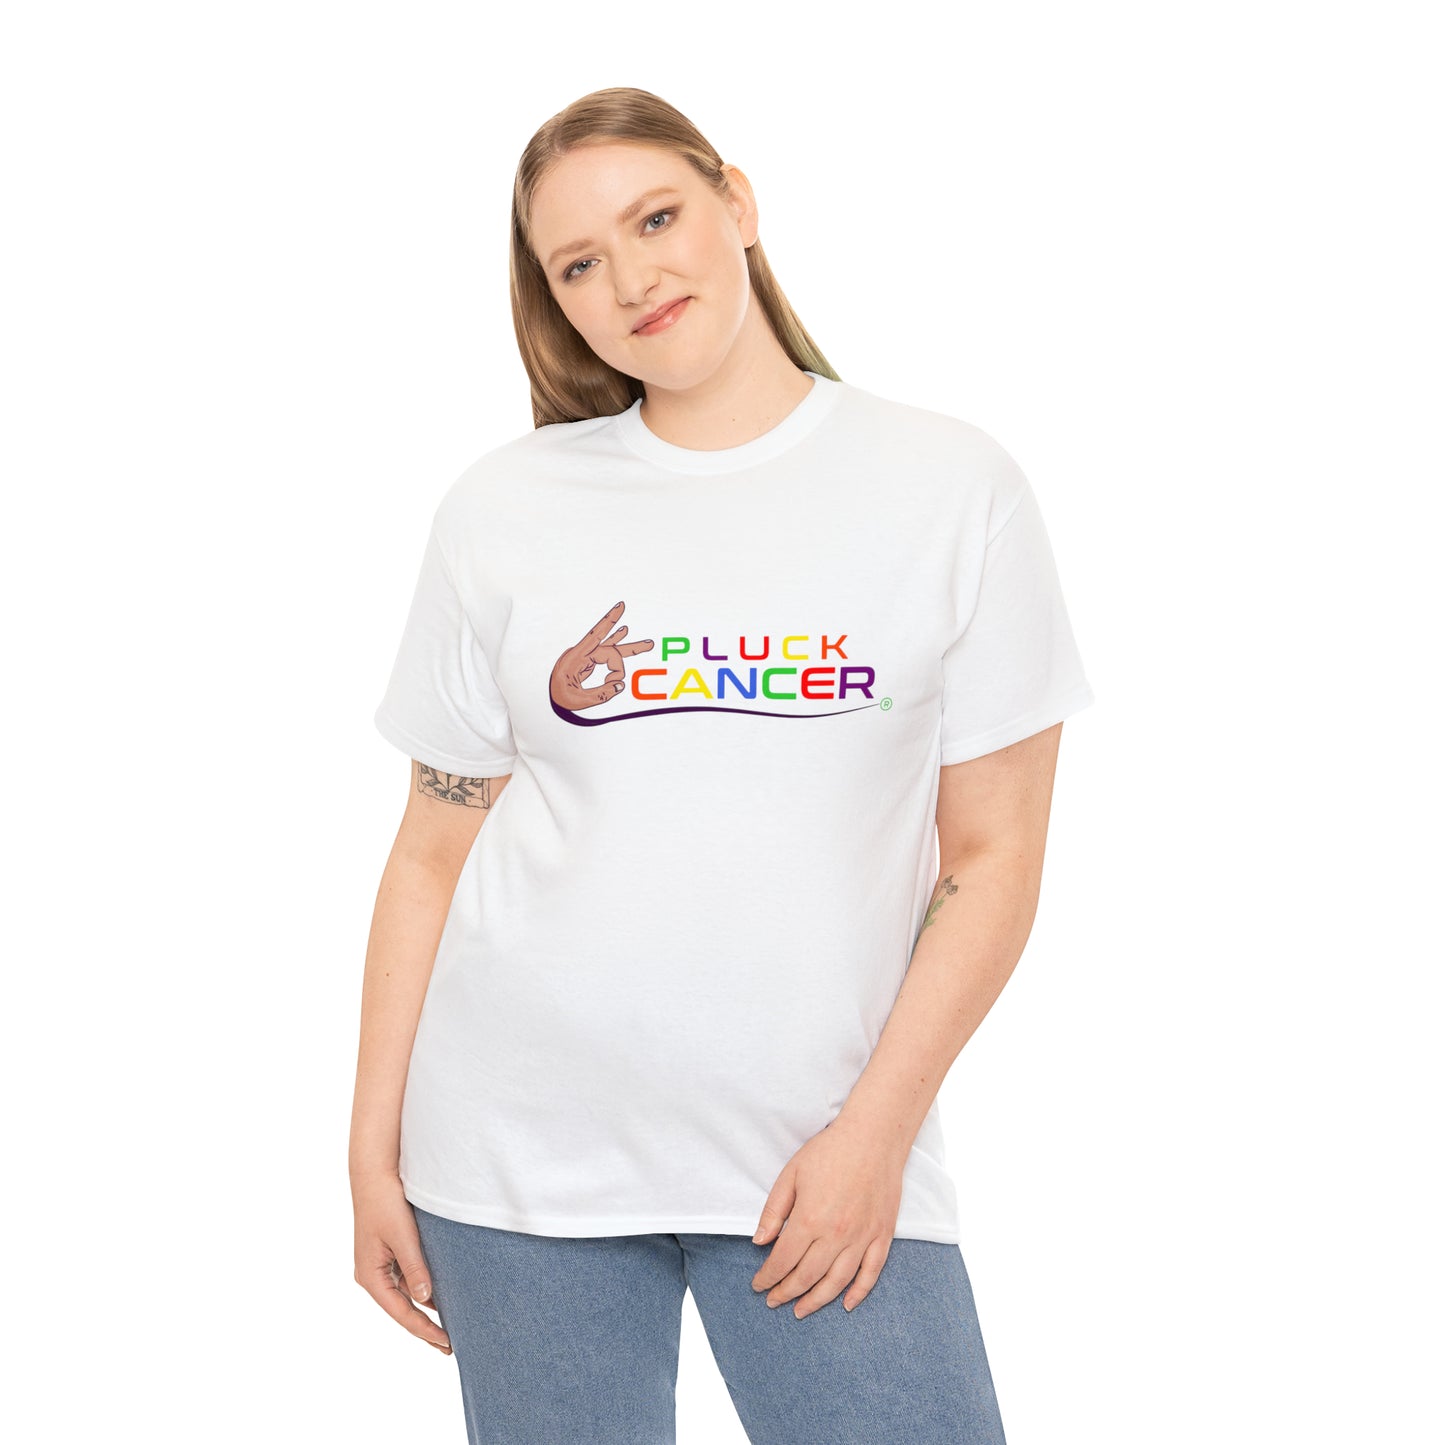 Pluck Cancer Women's Cotton T-Shirt - White